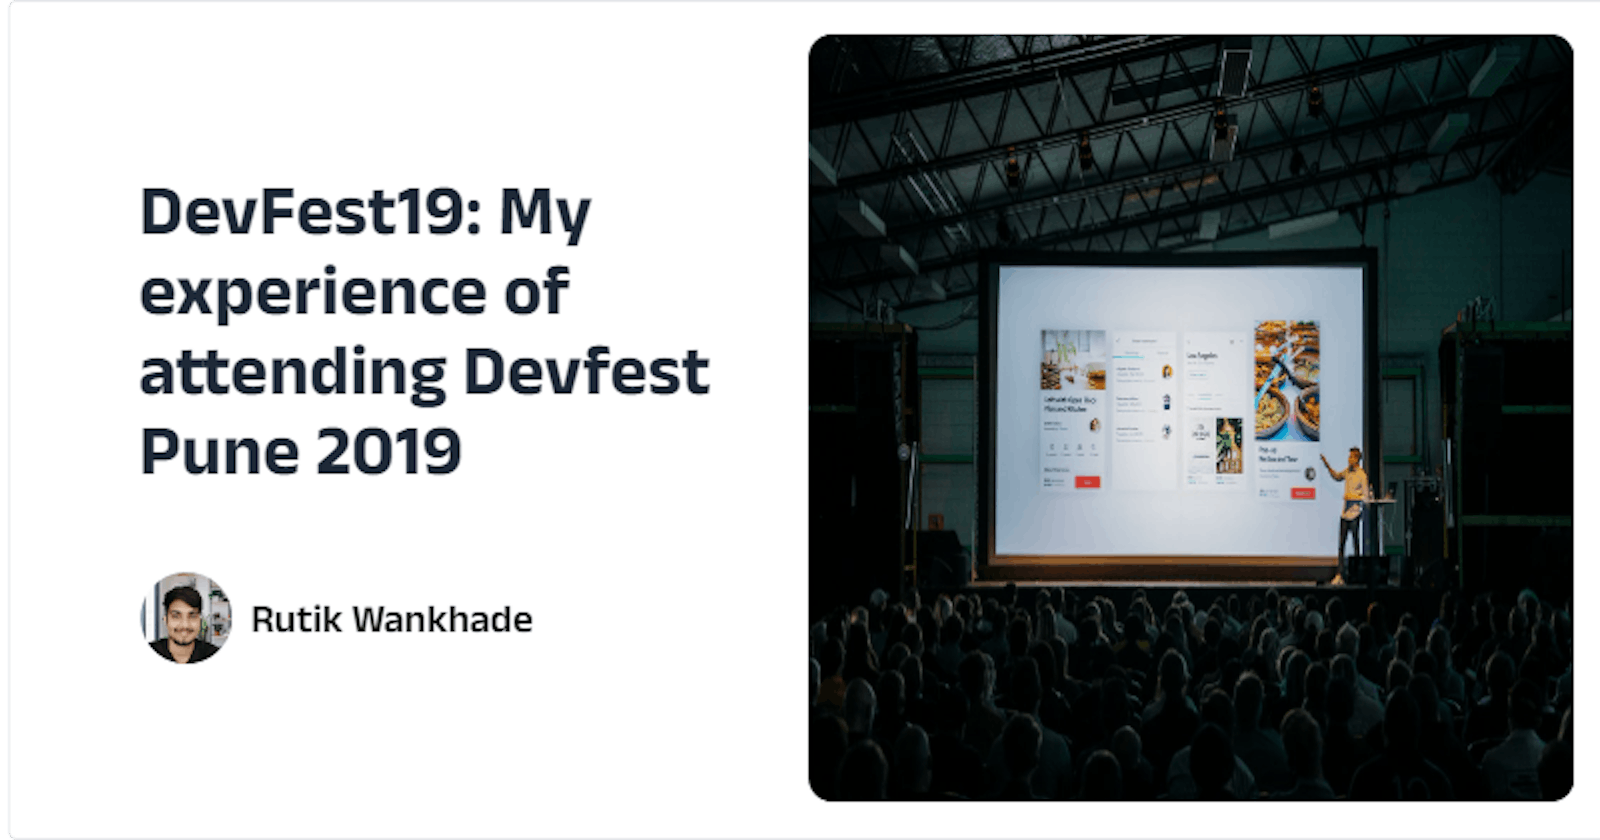 DevFest19: My experience of attending Devfest Pune 2019